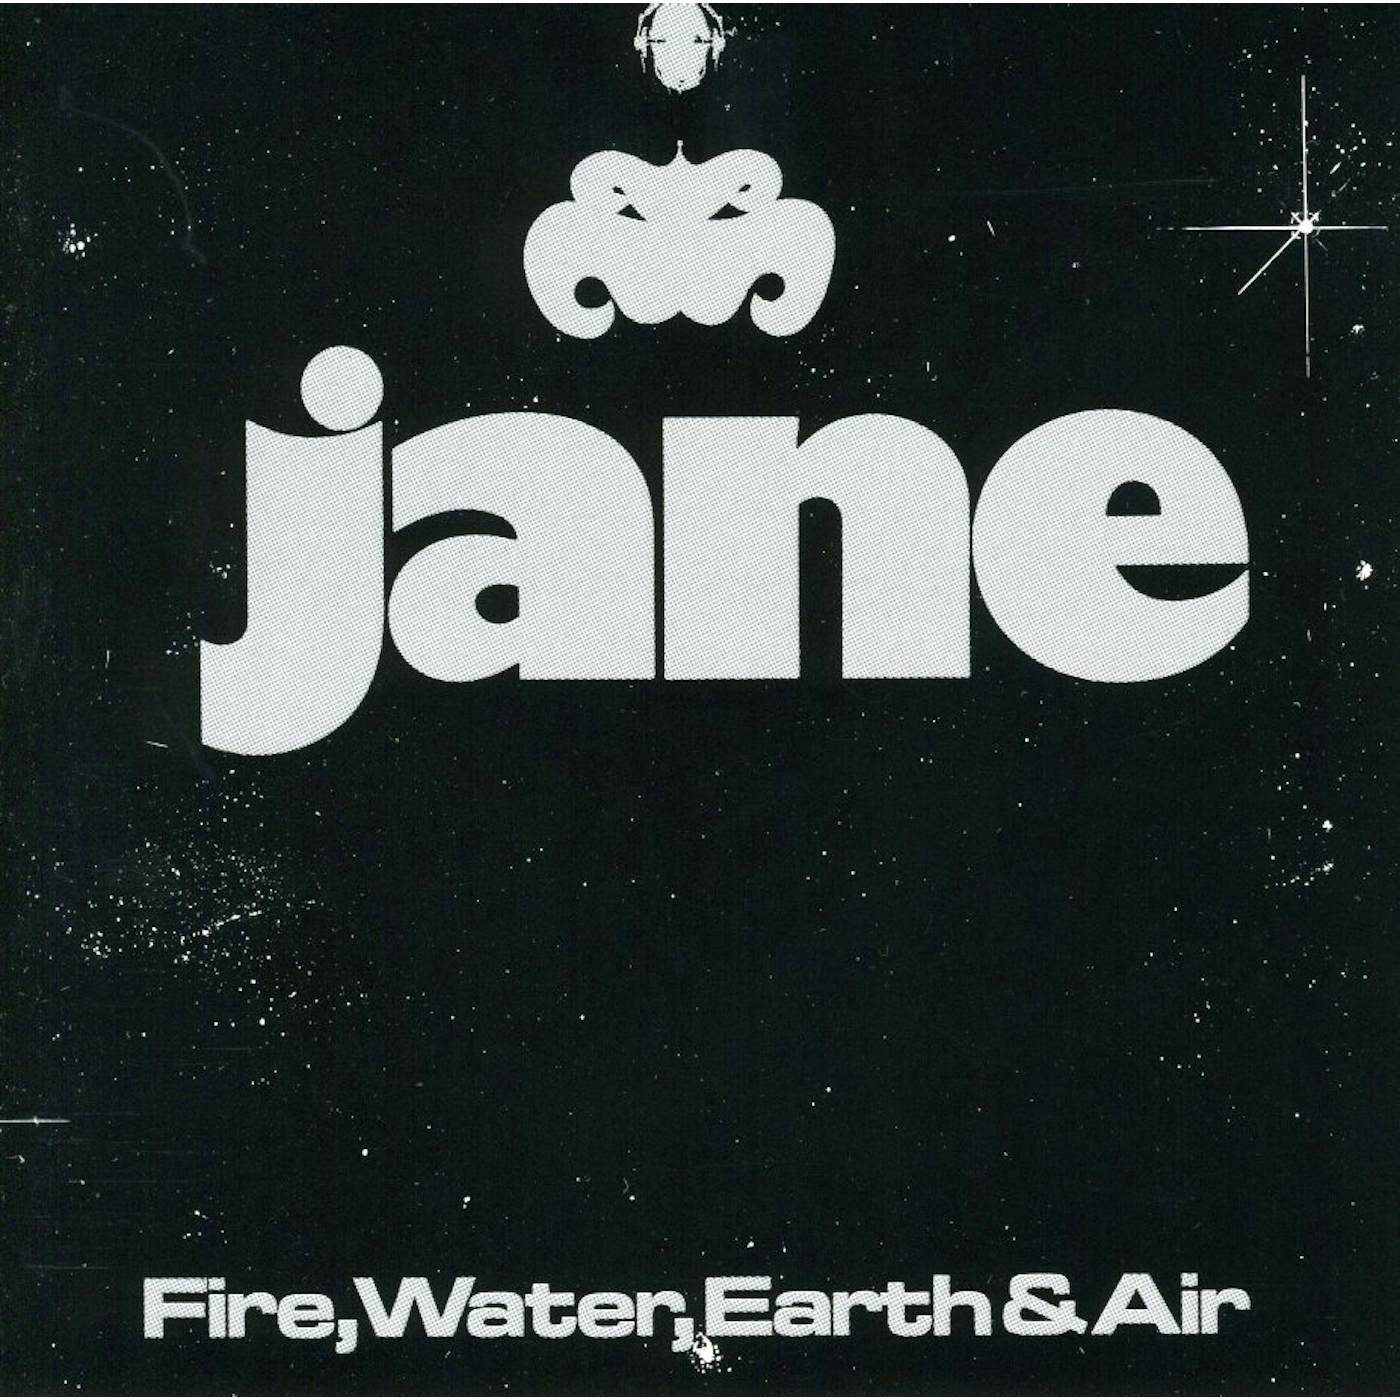 Jane FIRE WATER EARTH & AIR CD